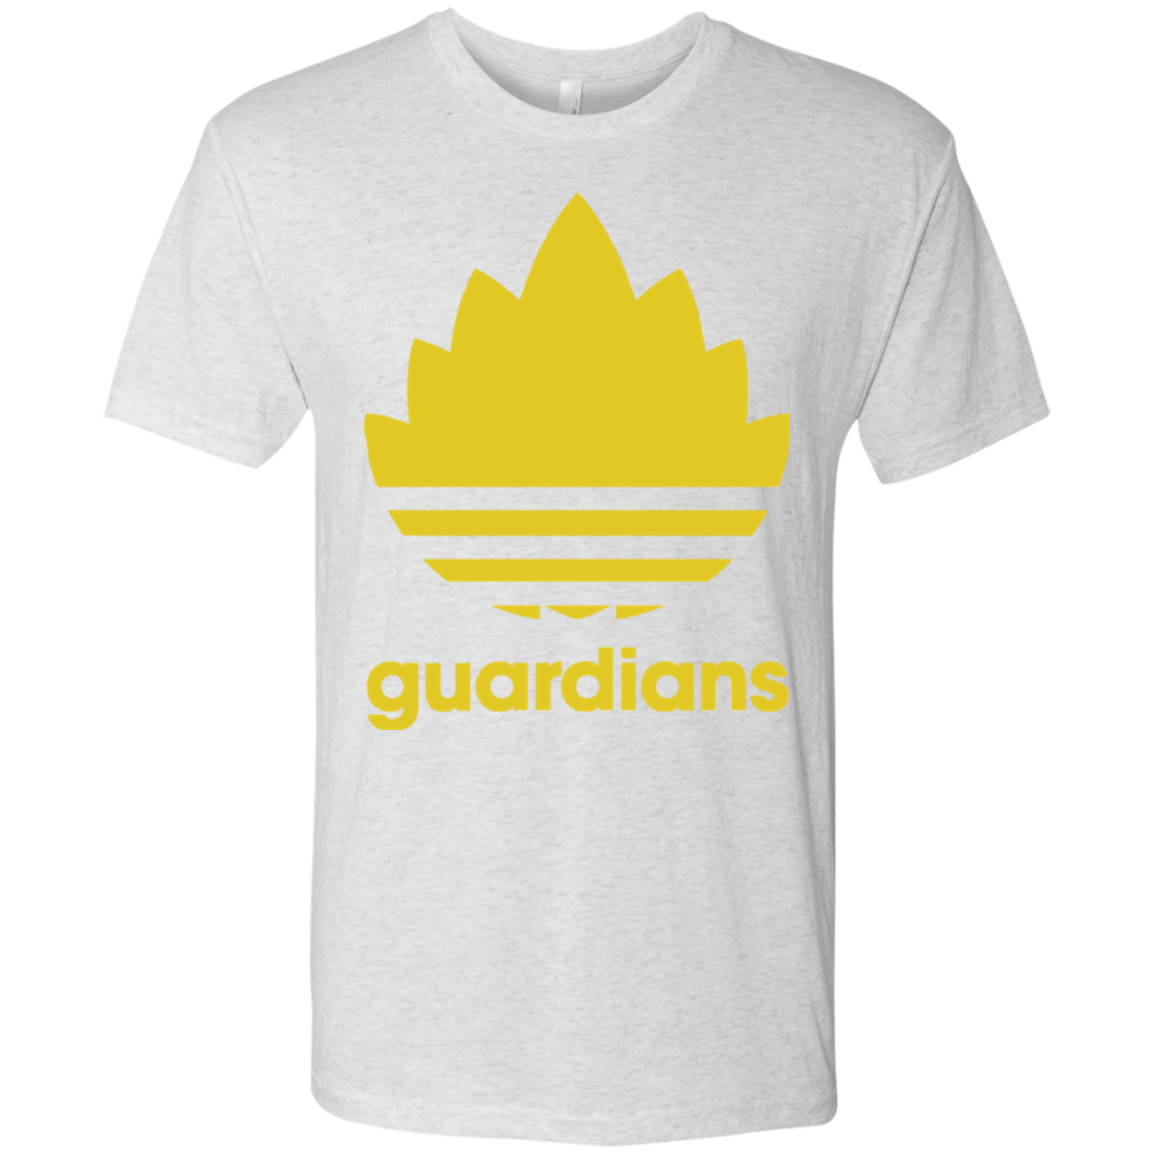 Sport-Lord Men's Triblend T-Shirt